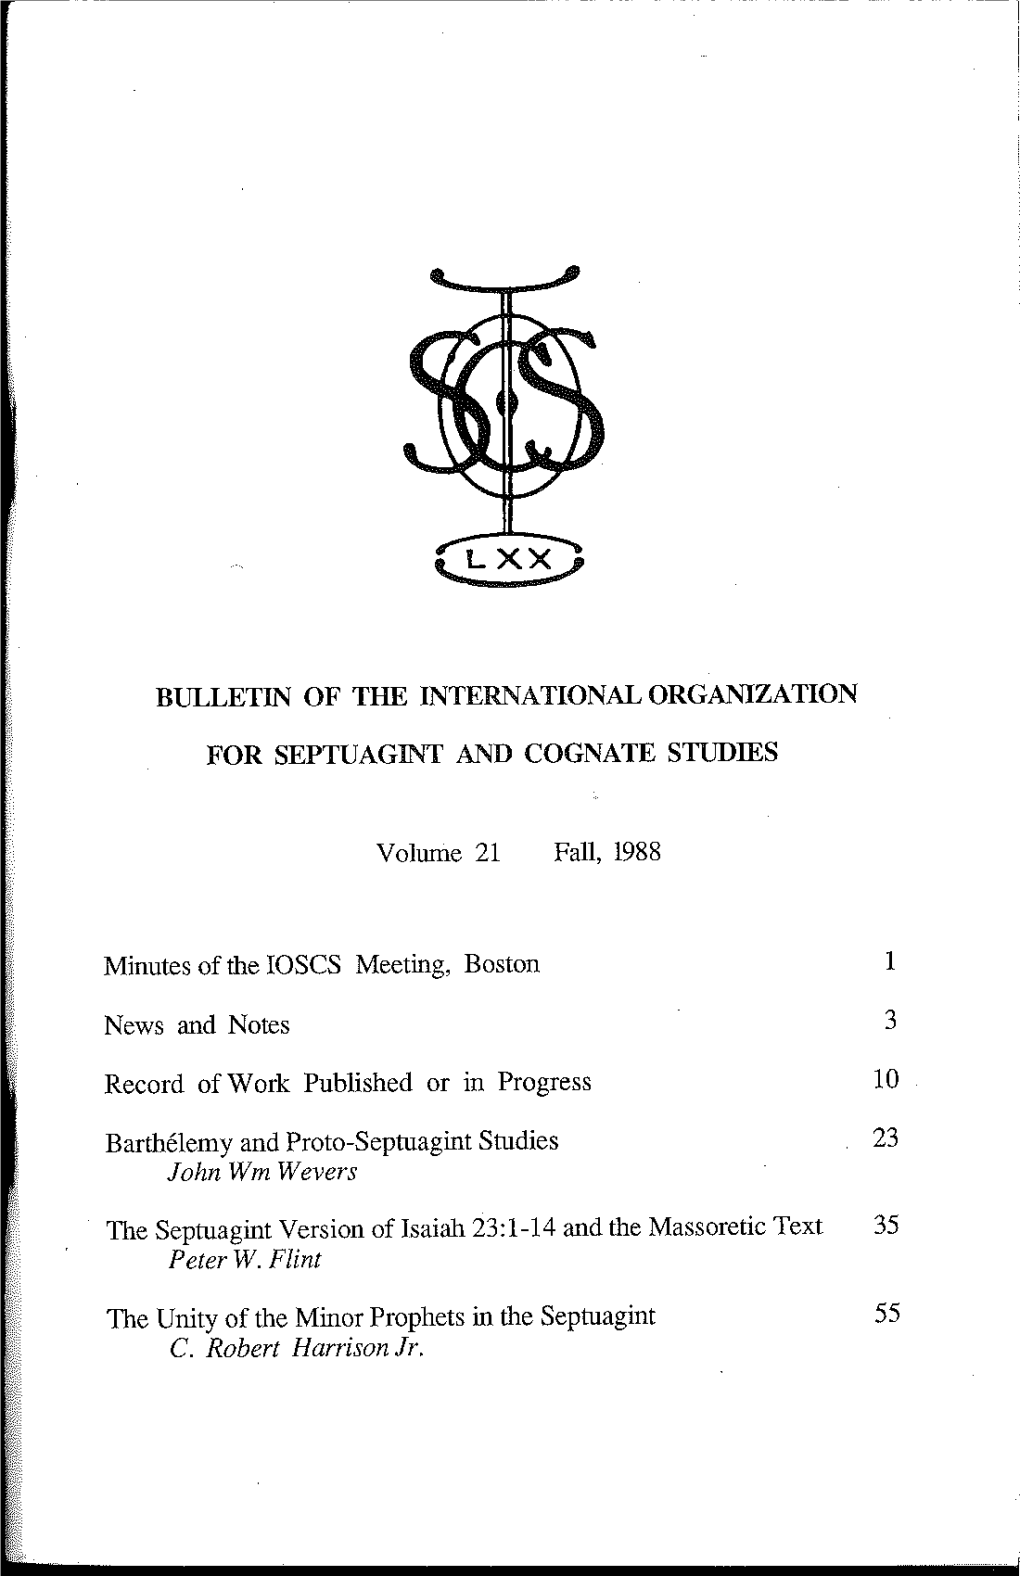 PDF of Volume 21